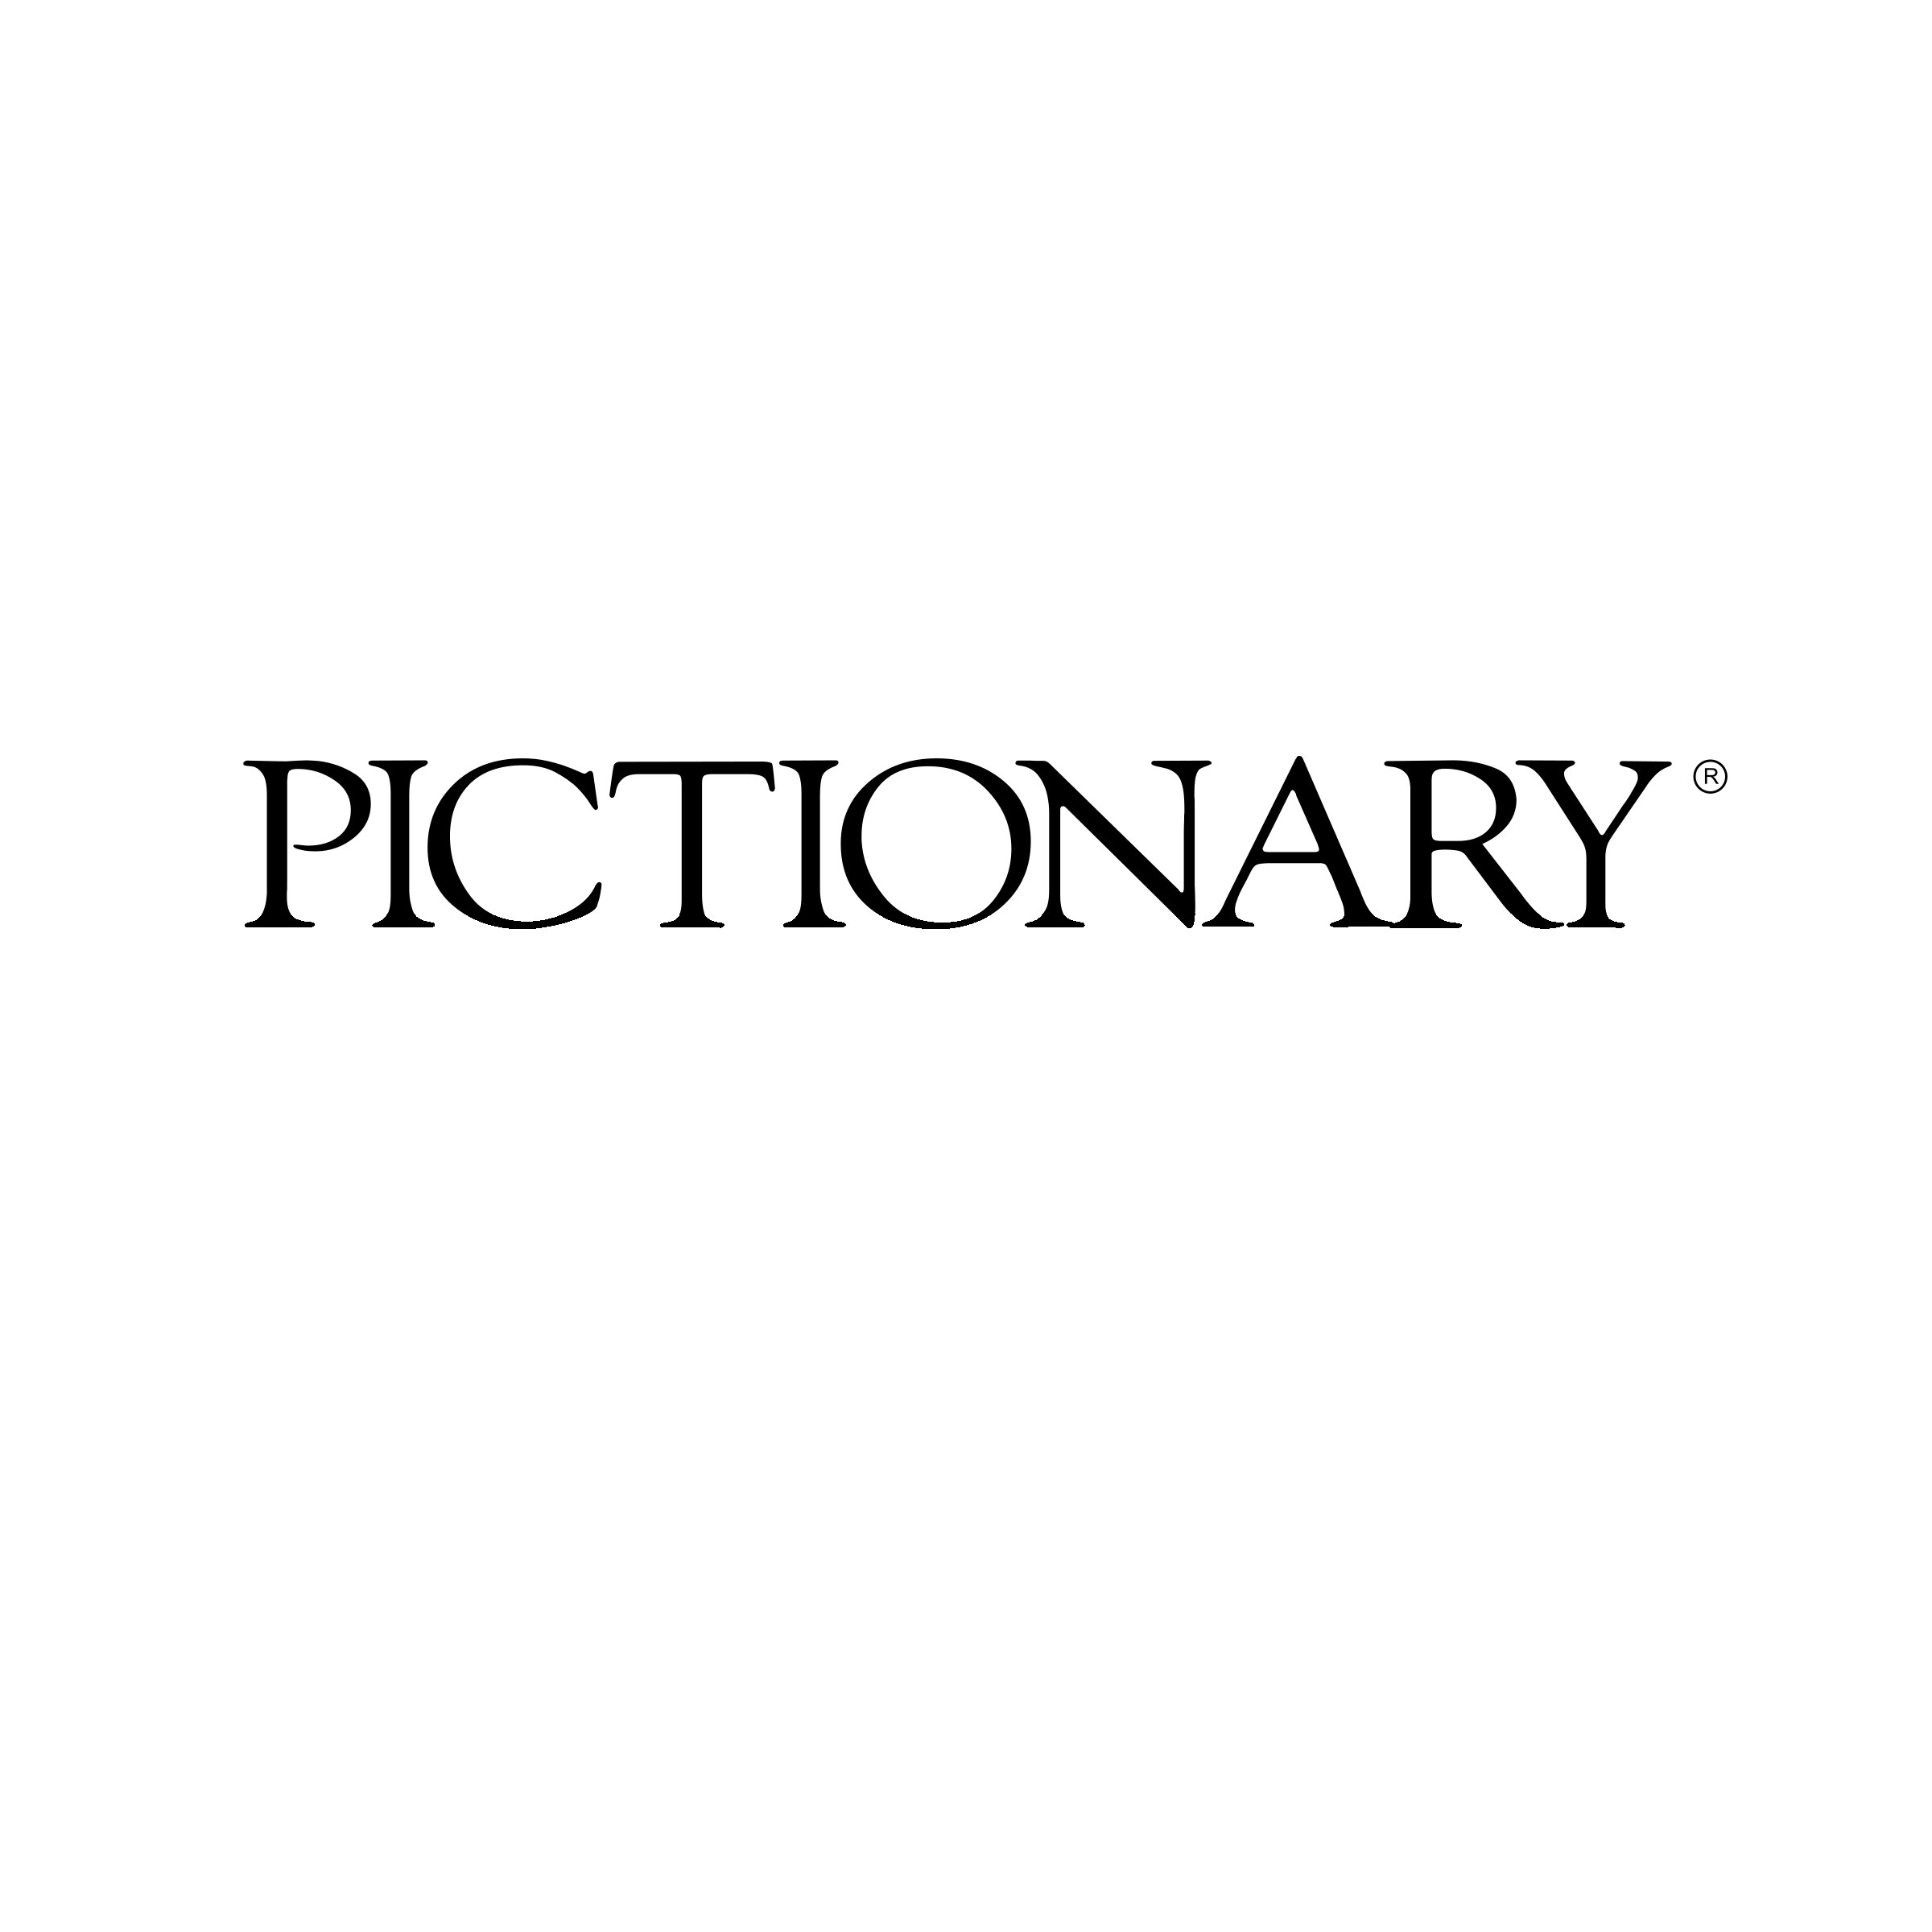 Pictionary Logo - Pictionary Logo PNG Transparent & SVG Vector - Freebie Supply